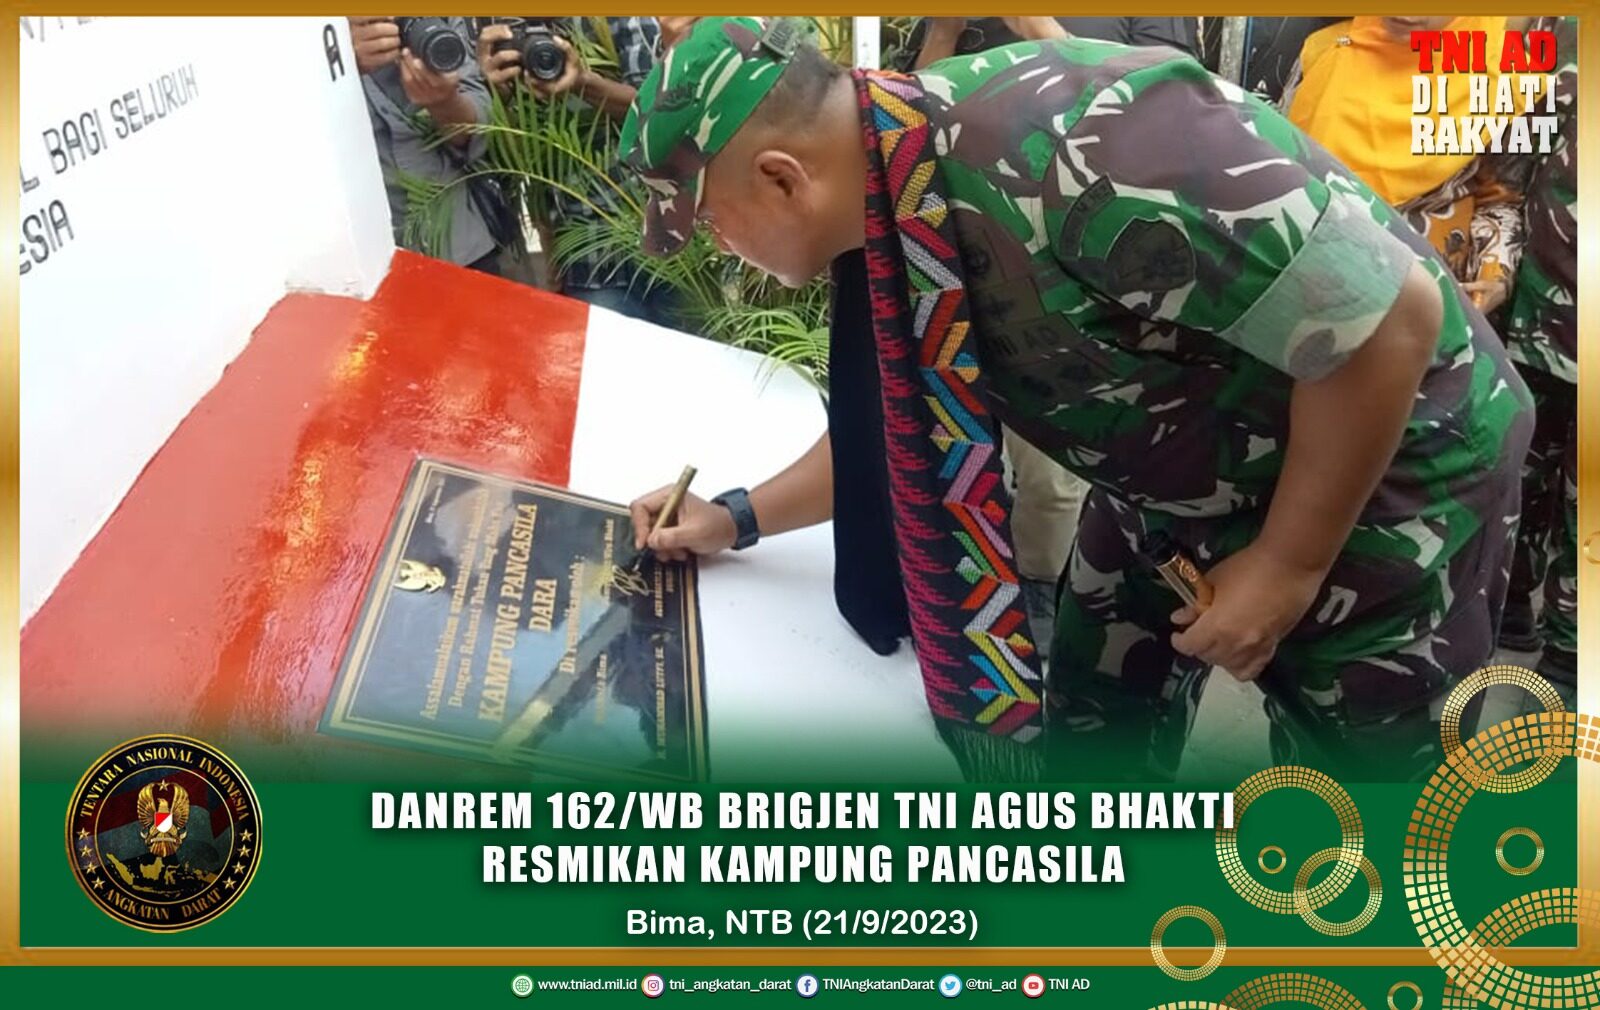 Danrem 162/WB Brigjen TNI Agus Bhakti, S.I.P., M.I.P., M.Han., Resmikan Kampung Pancasila